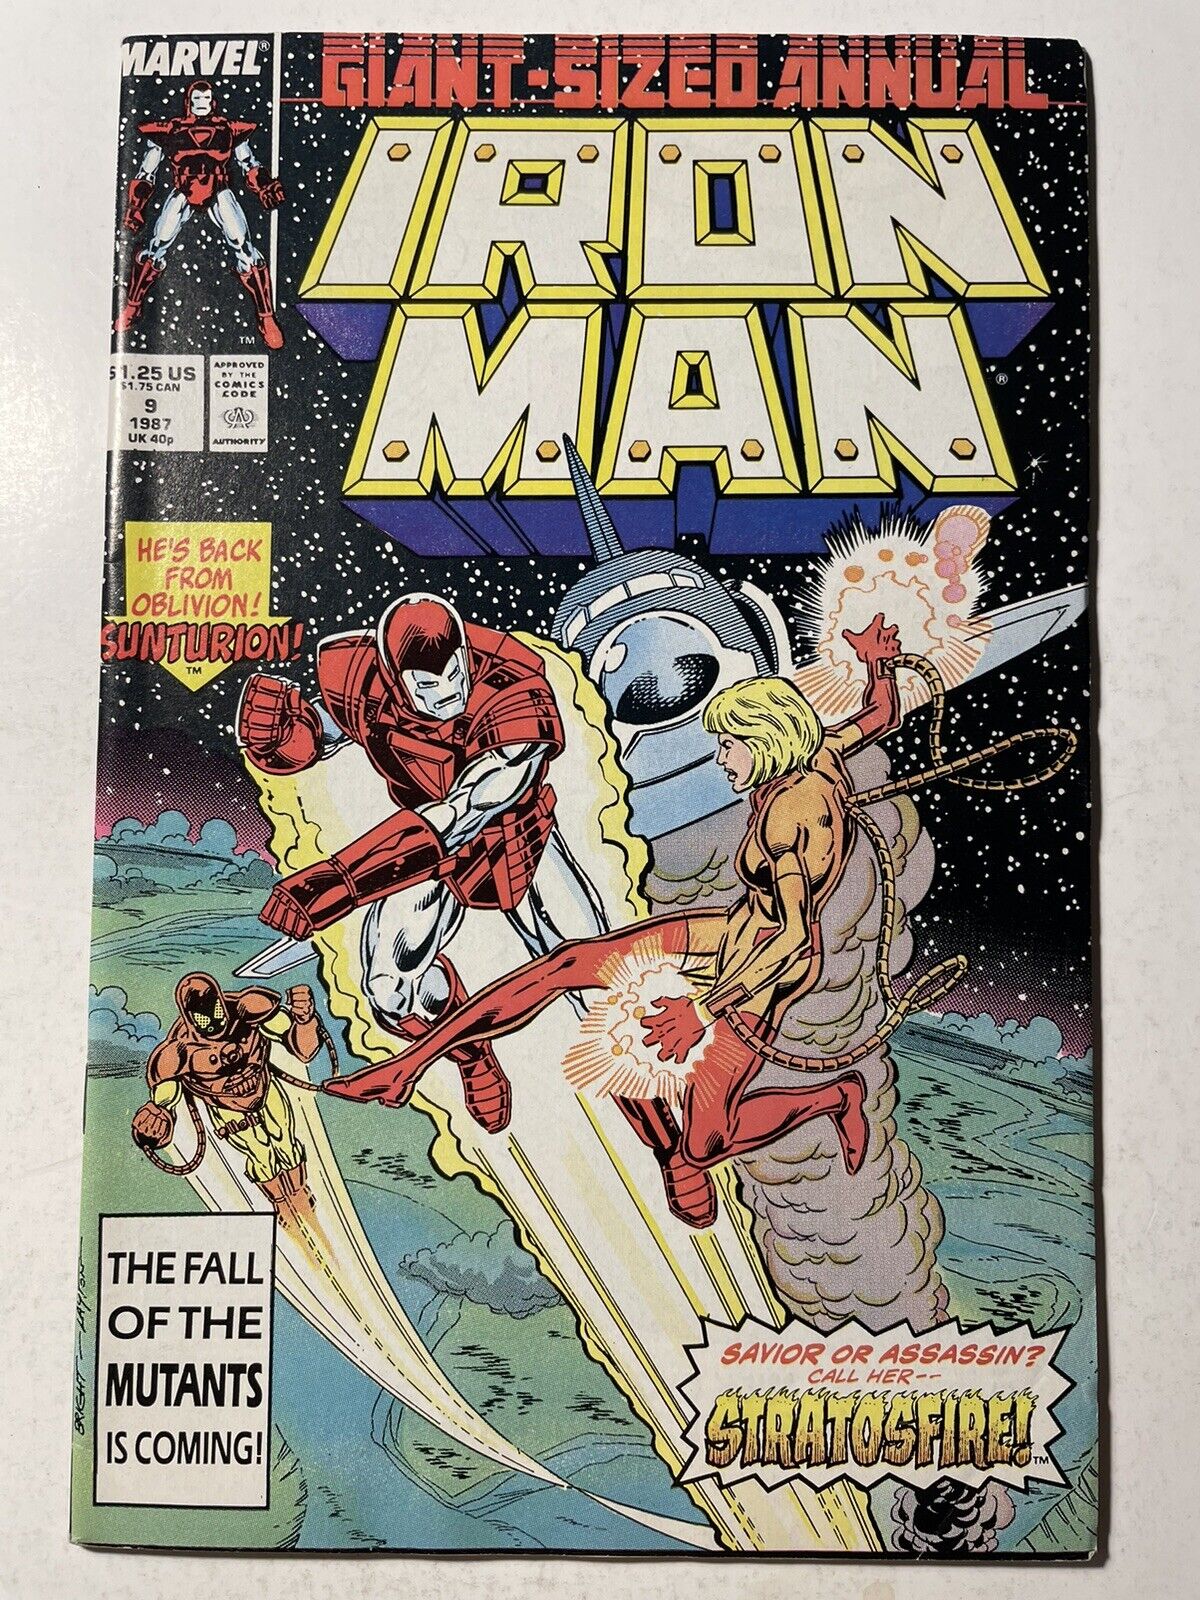 IRON MAN GIANT SIZE ANNUAL #9, 1987 MARVEL COMICS